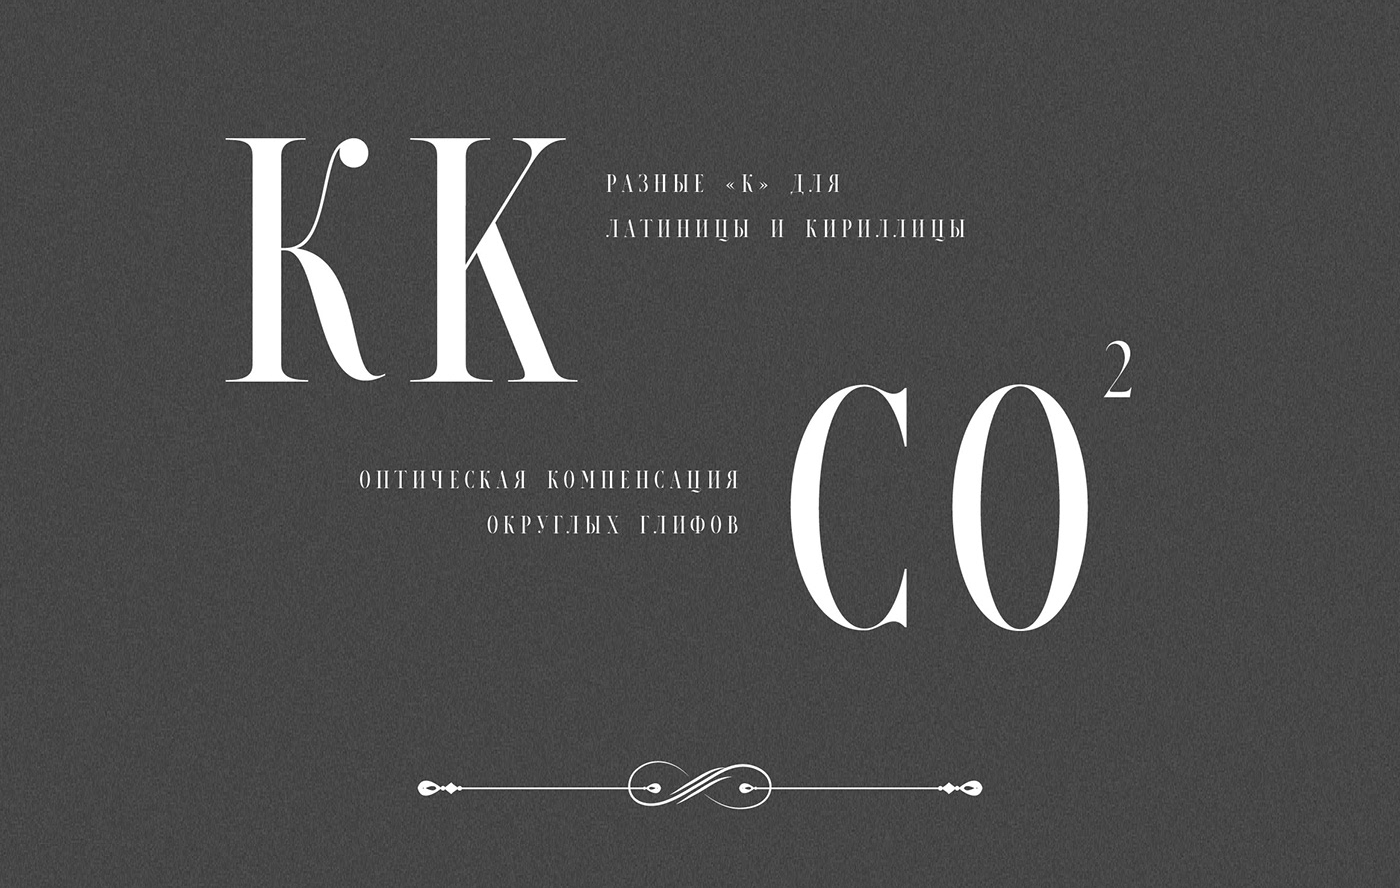 Petrogradski Regular Font preview